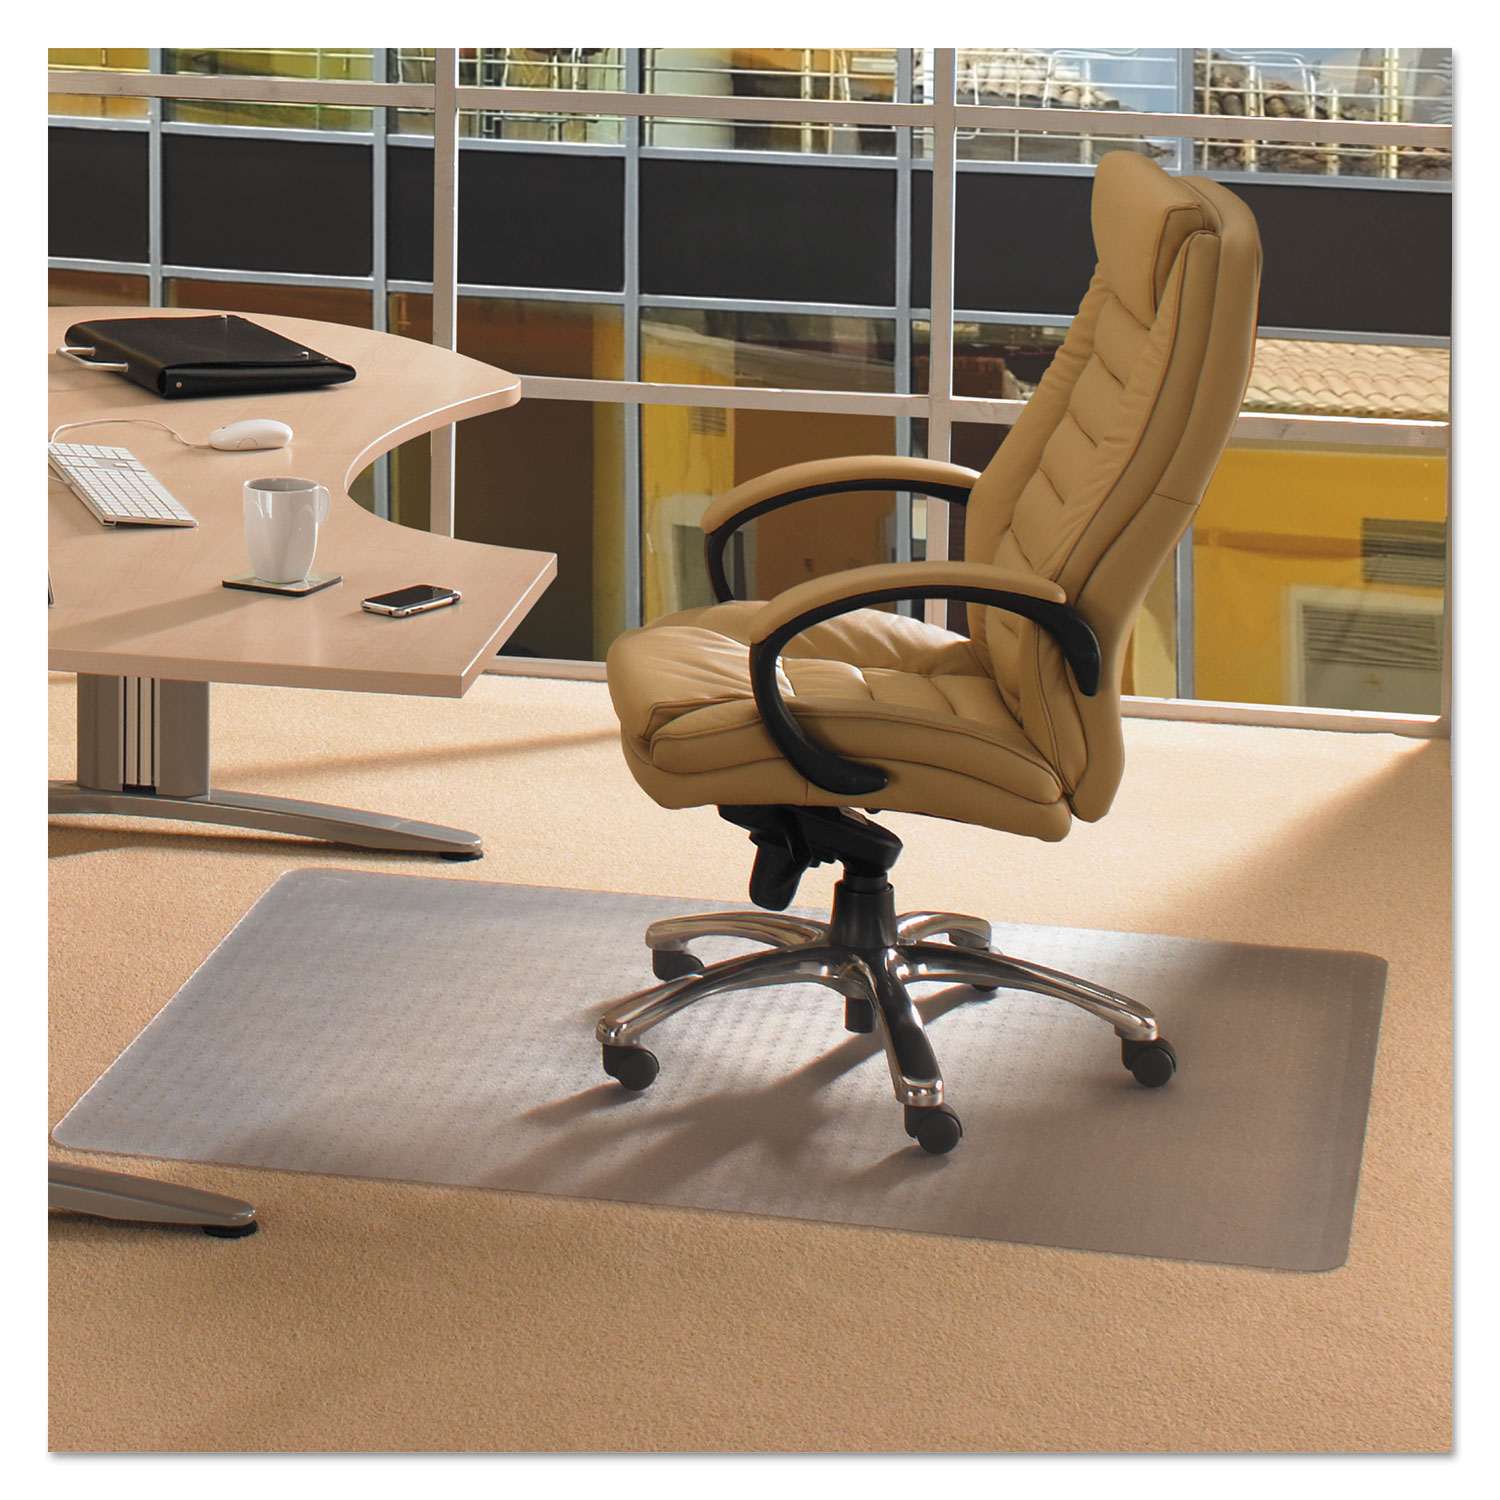  Floortex PF1115225EV Cleartex Advantagemat Phthalate Free PVC Chair Mat for Low Pile Carpet, 60 x 48, Clear (FLRPF1115225EV) 